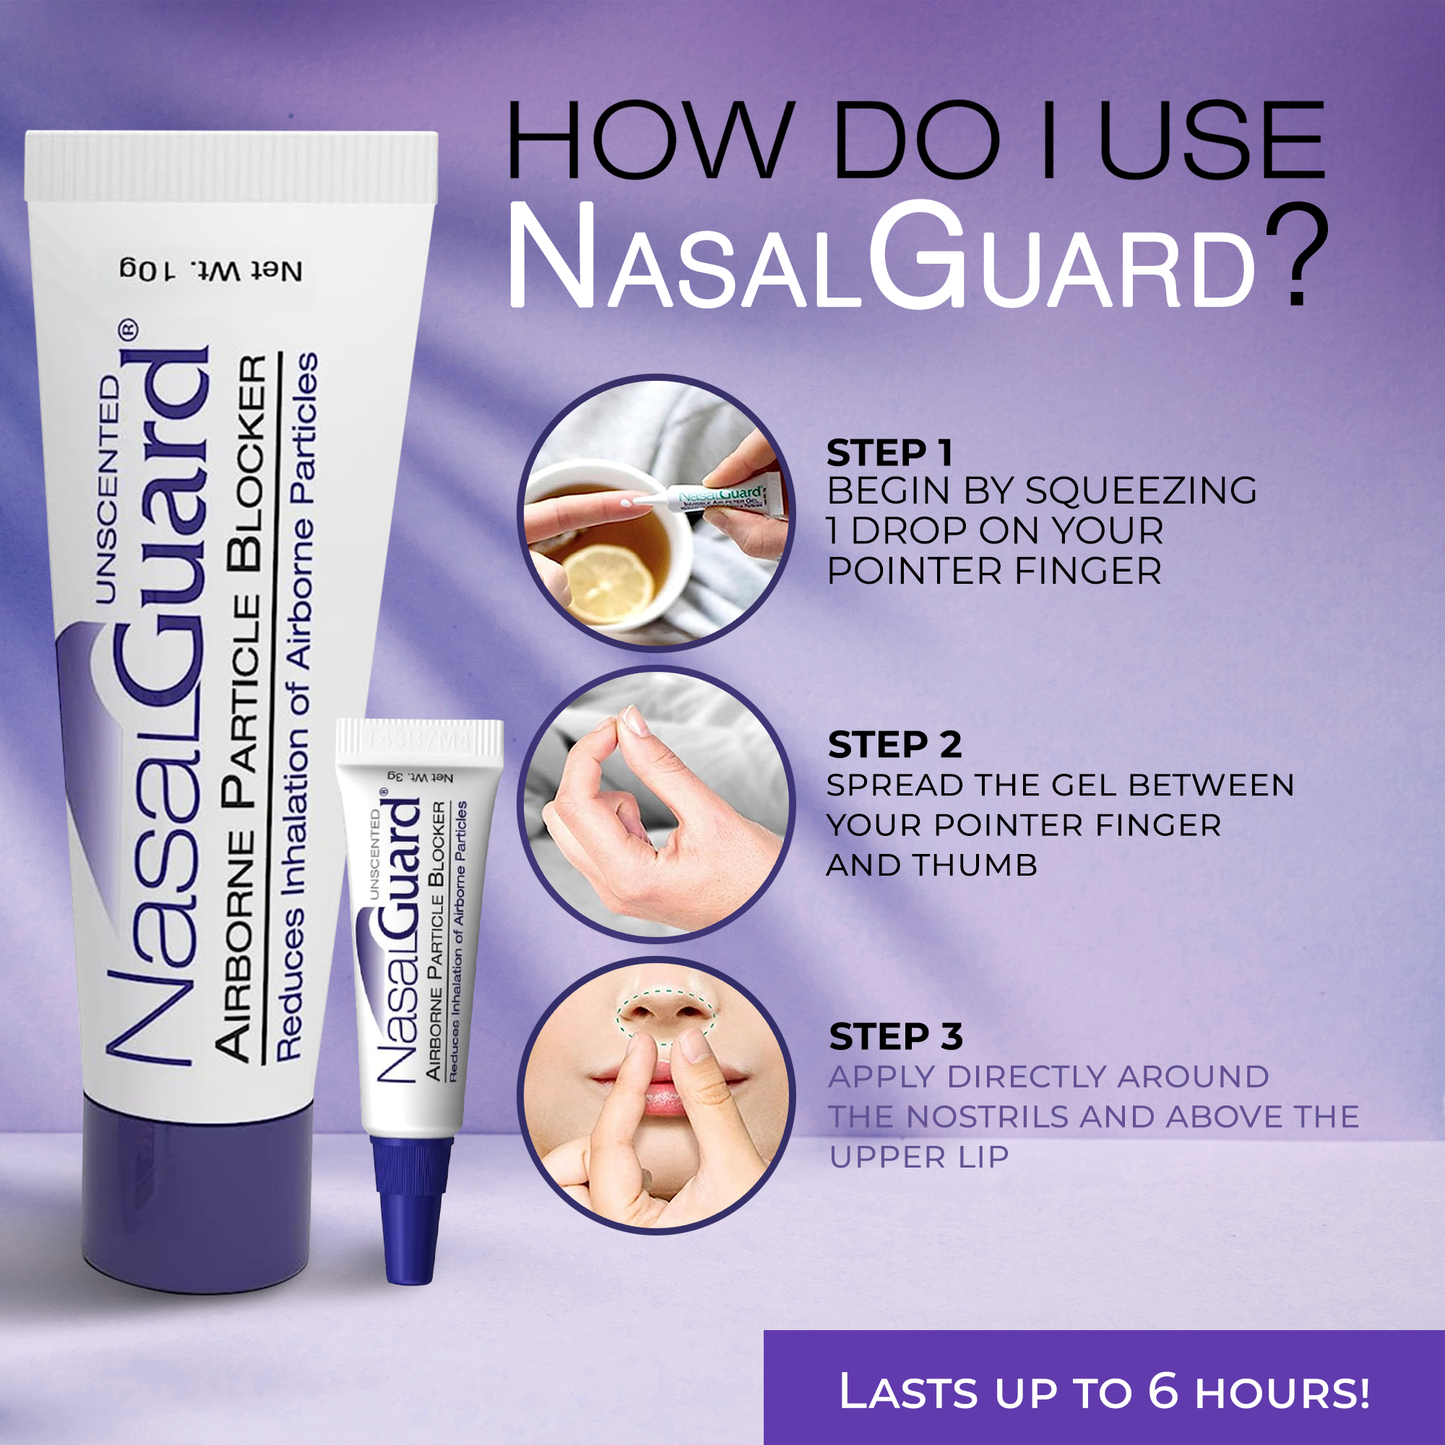 NasalGuard Airborne Particle Blocker, Allergy Relief Nasal Gel | Unscented | 3g Tube